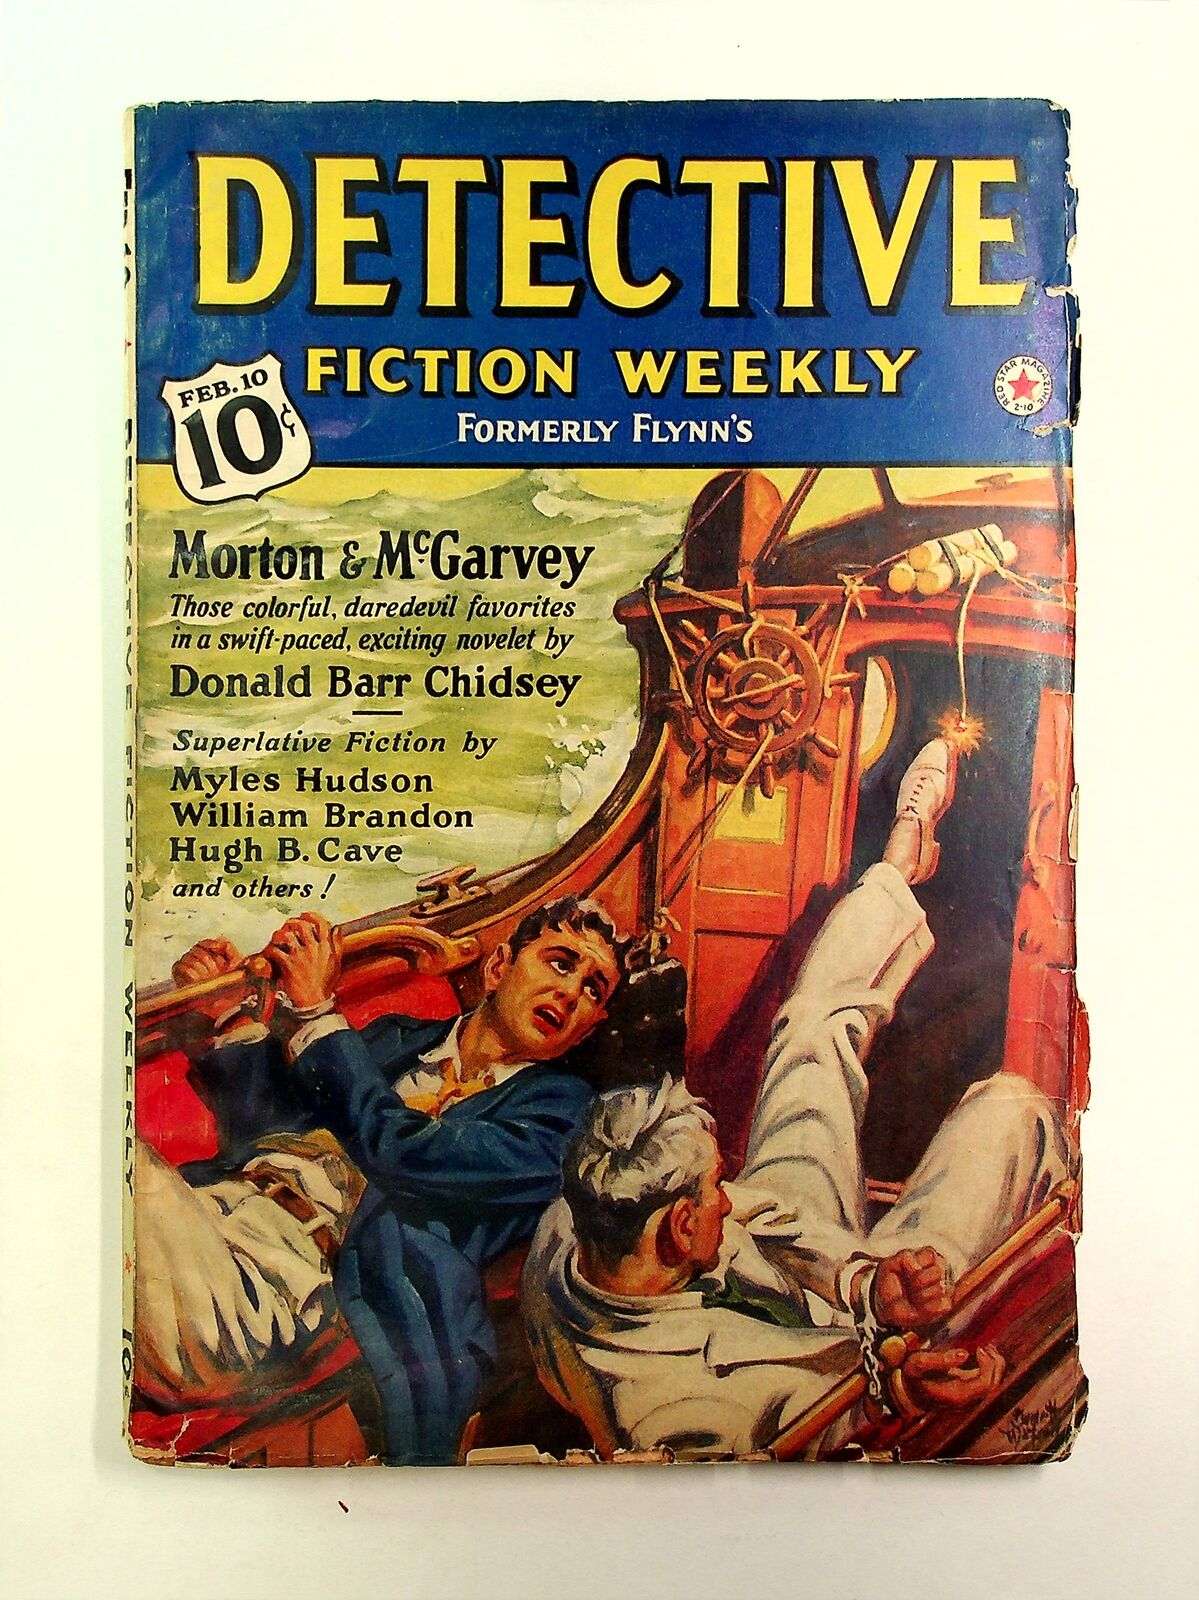 Detective Fiction Weekly Pulp Feb 10 1940 Vol. 134 #5 VG